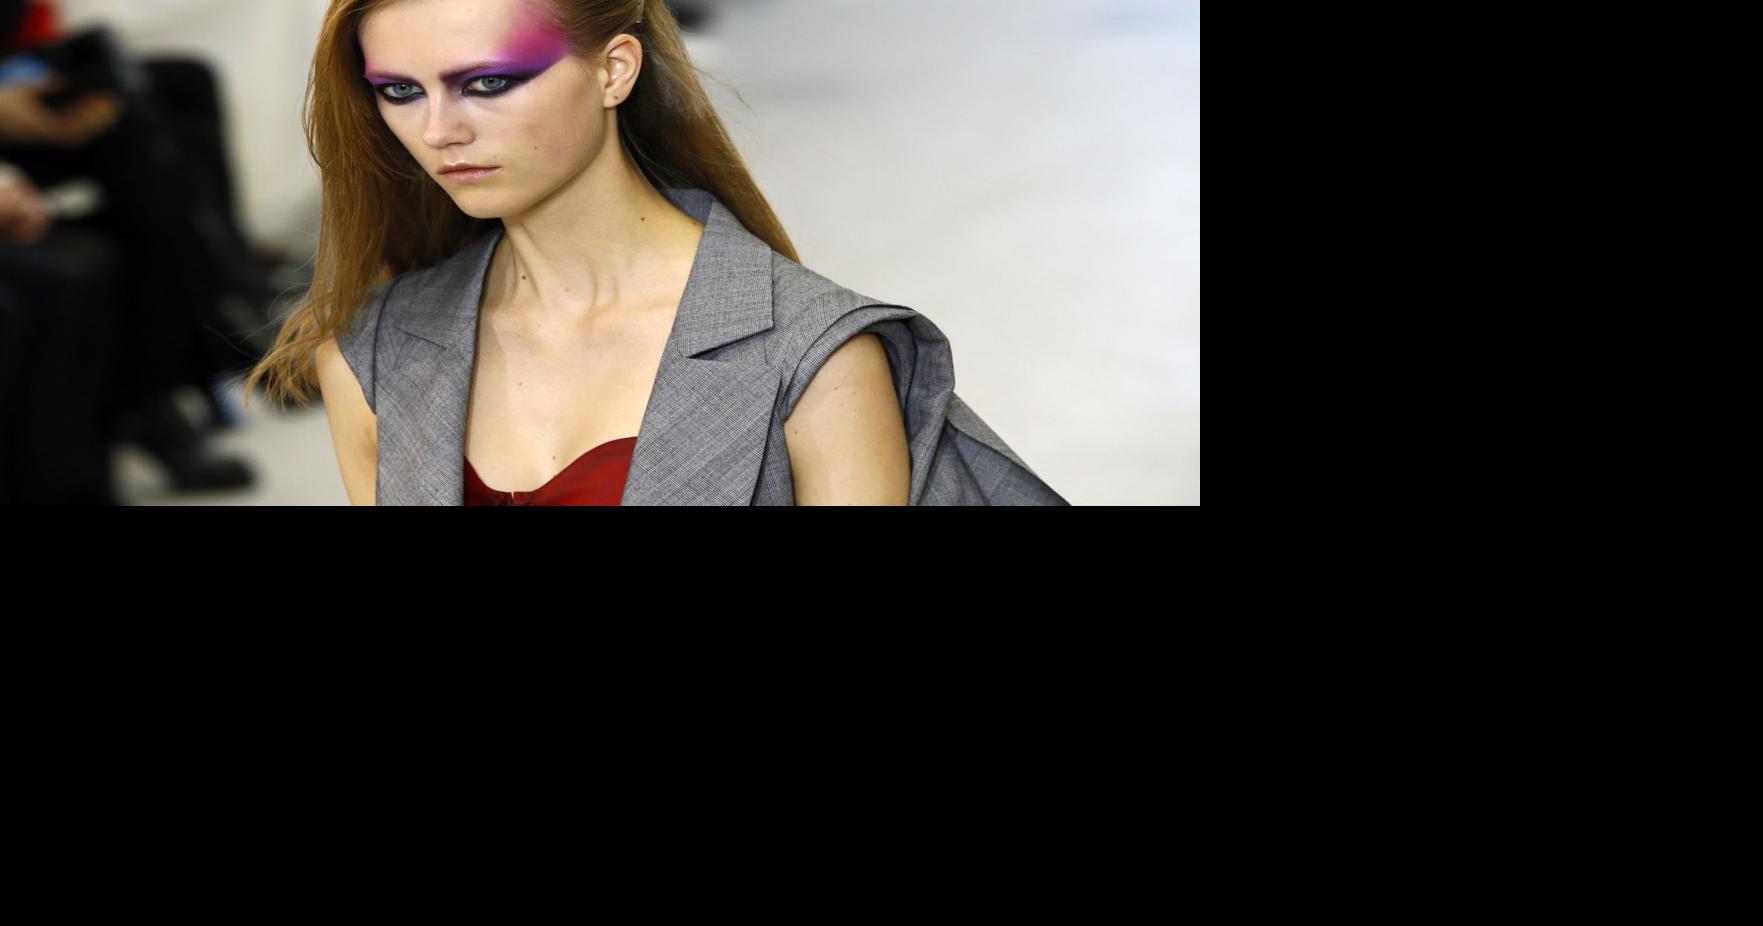 Alicia Vikander joins Lea Seydoux at Louis Vuitton's Paris Fashion